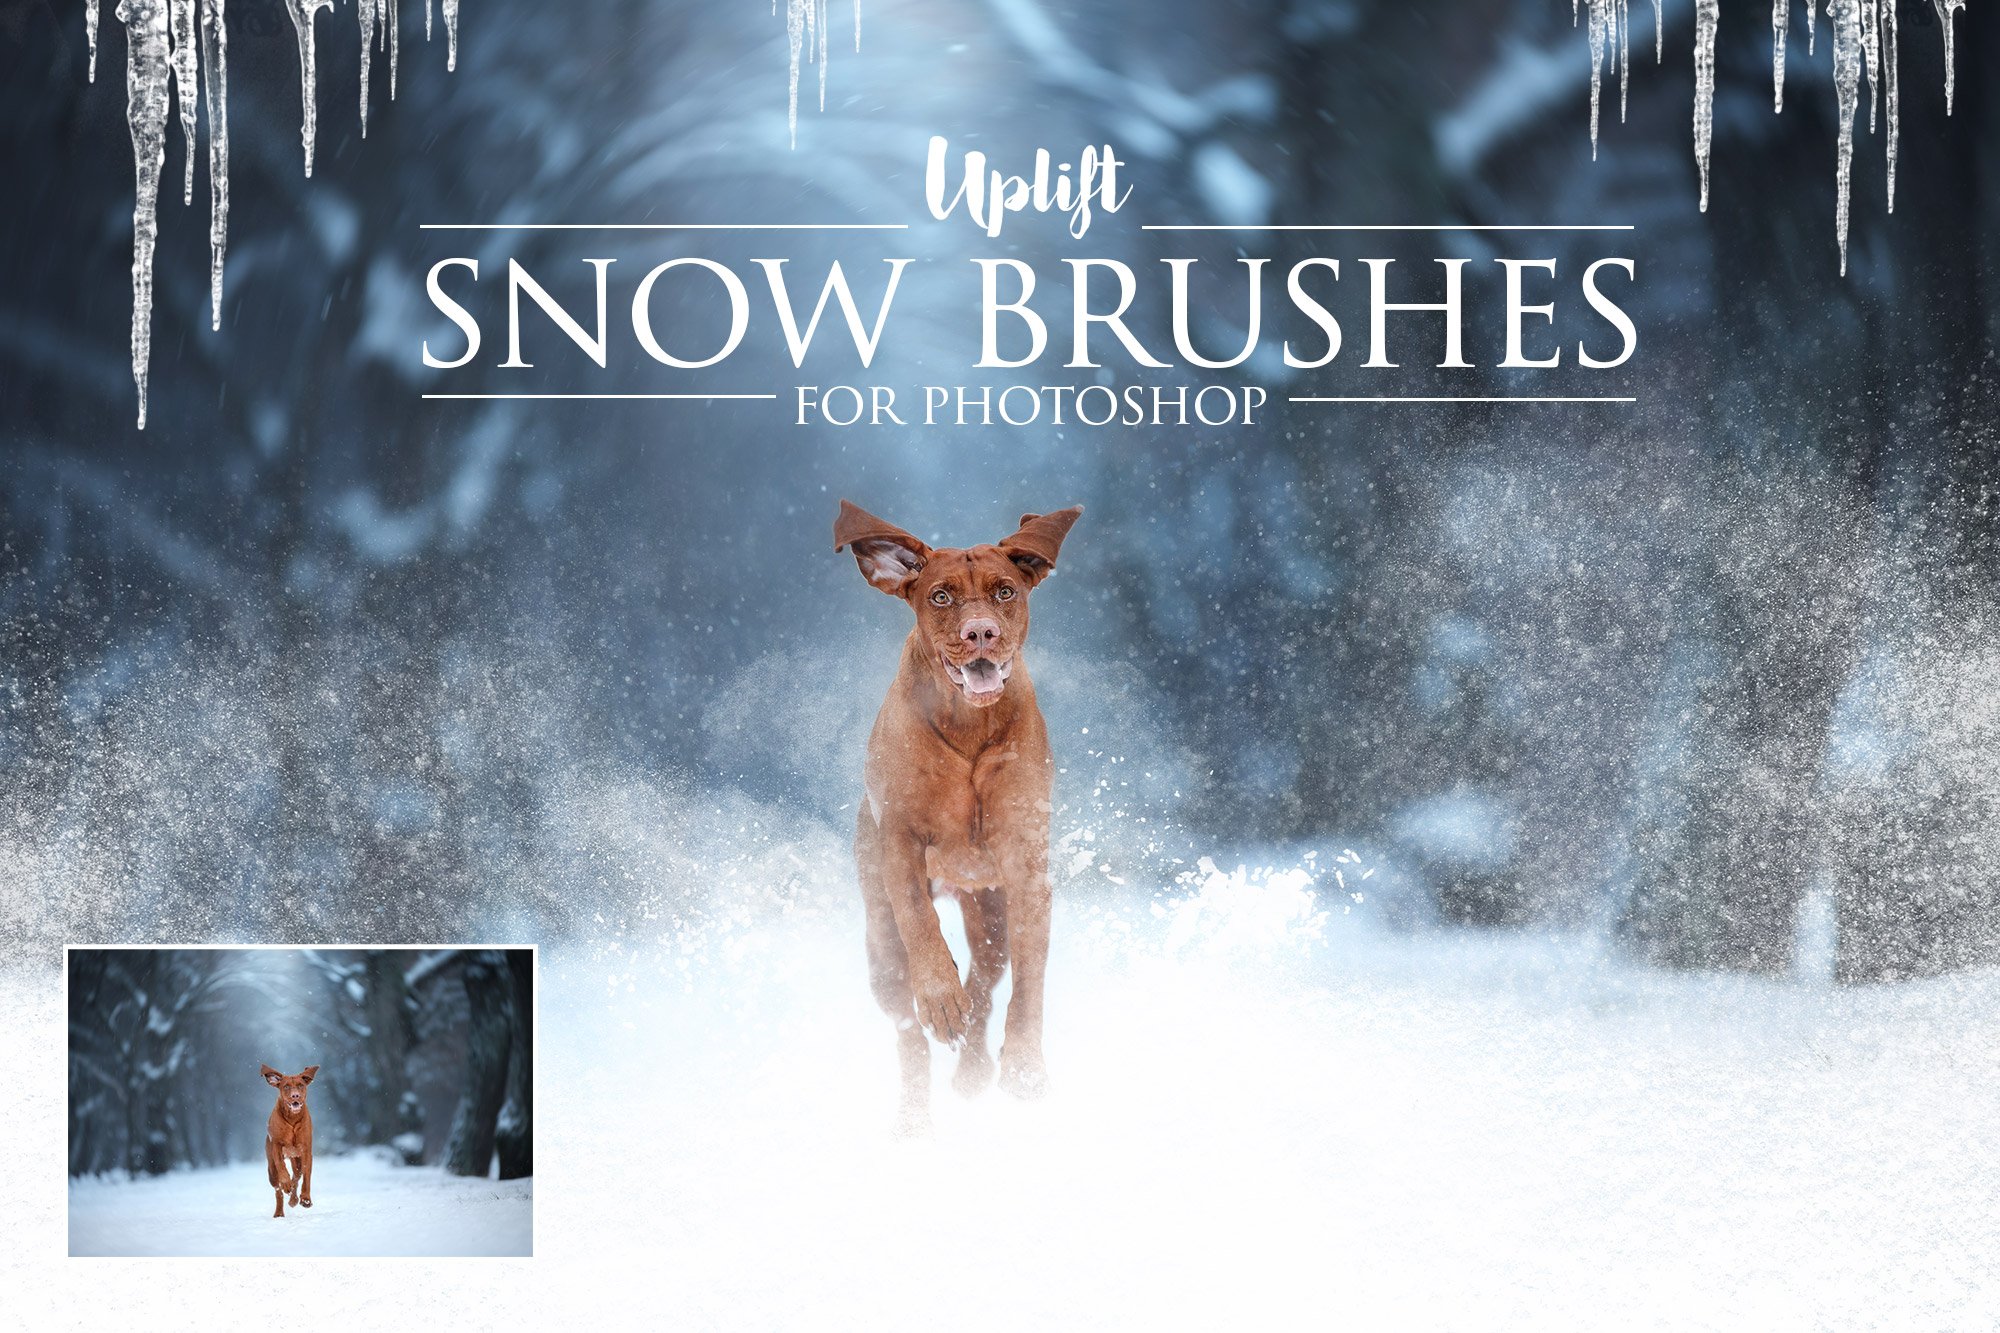 25 Snow Brushes for Photoshopcover image.